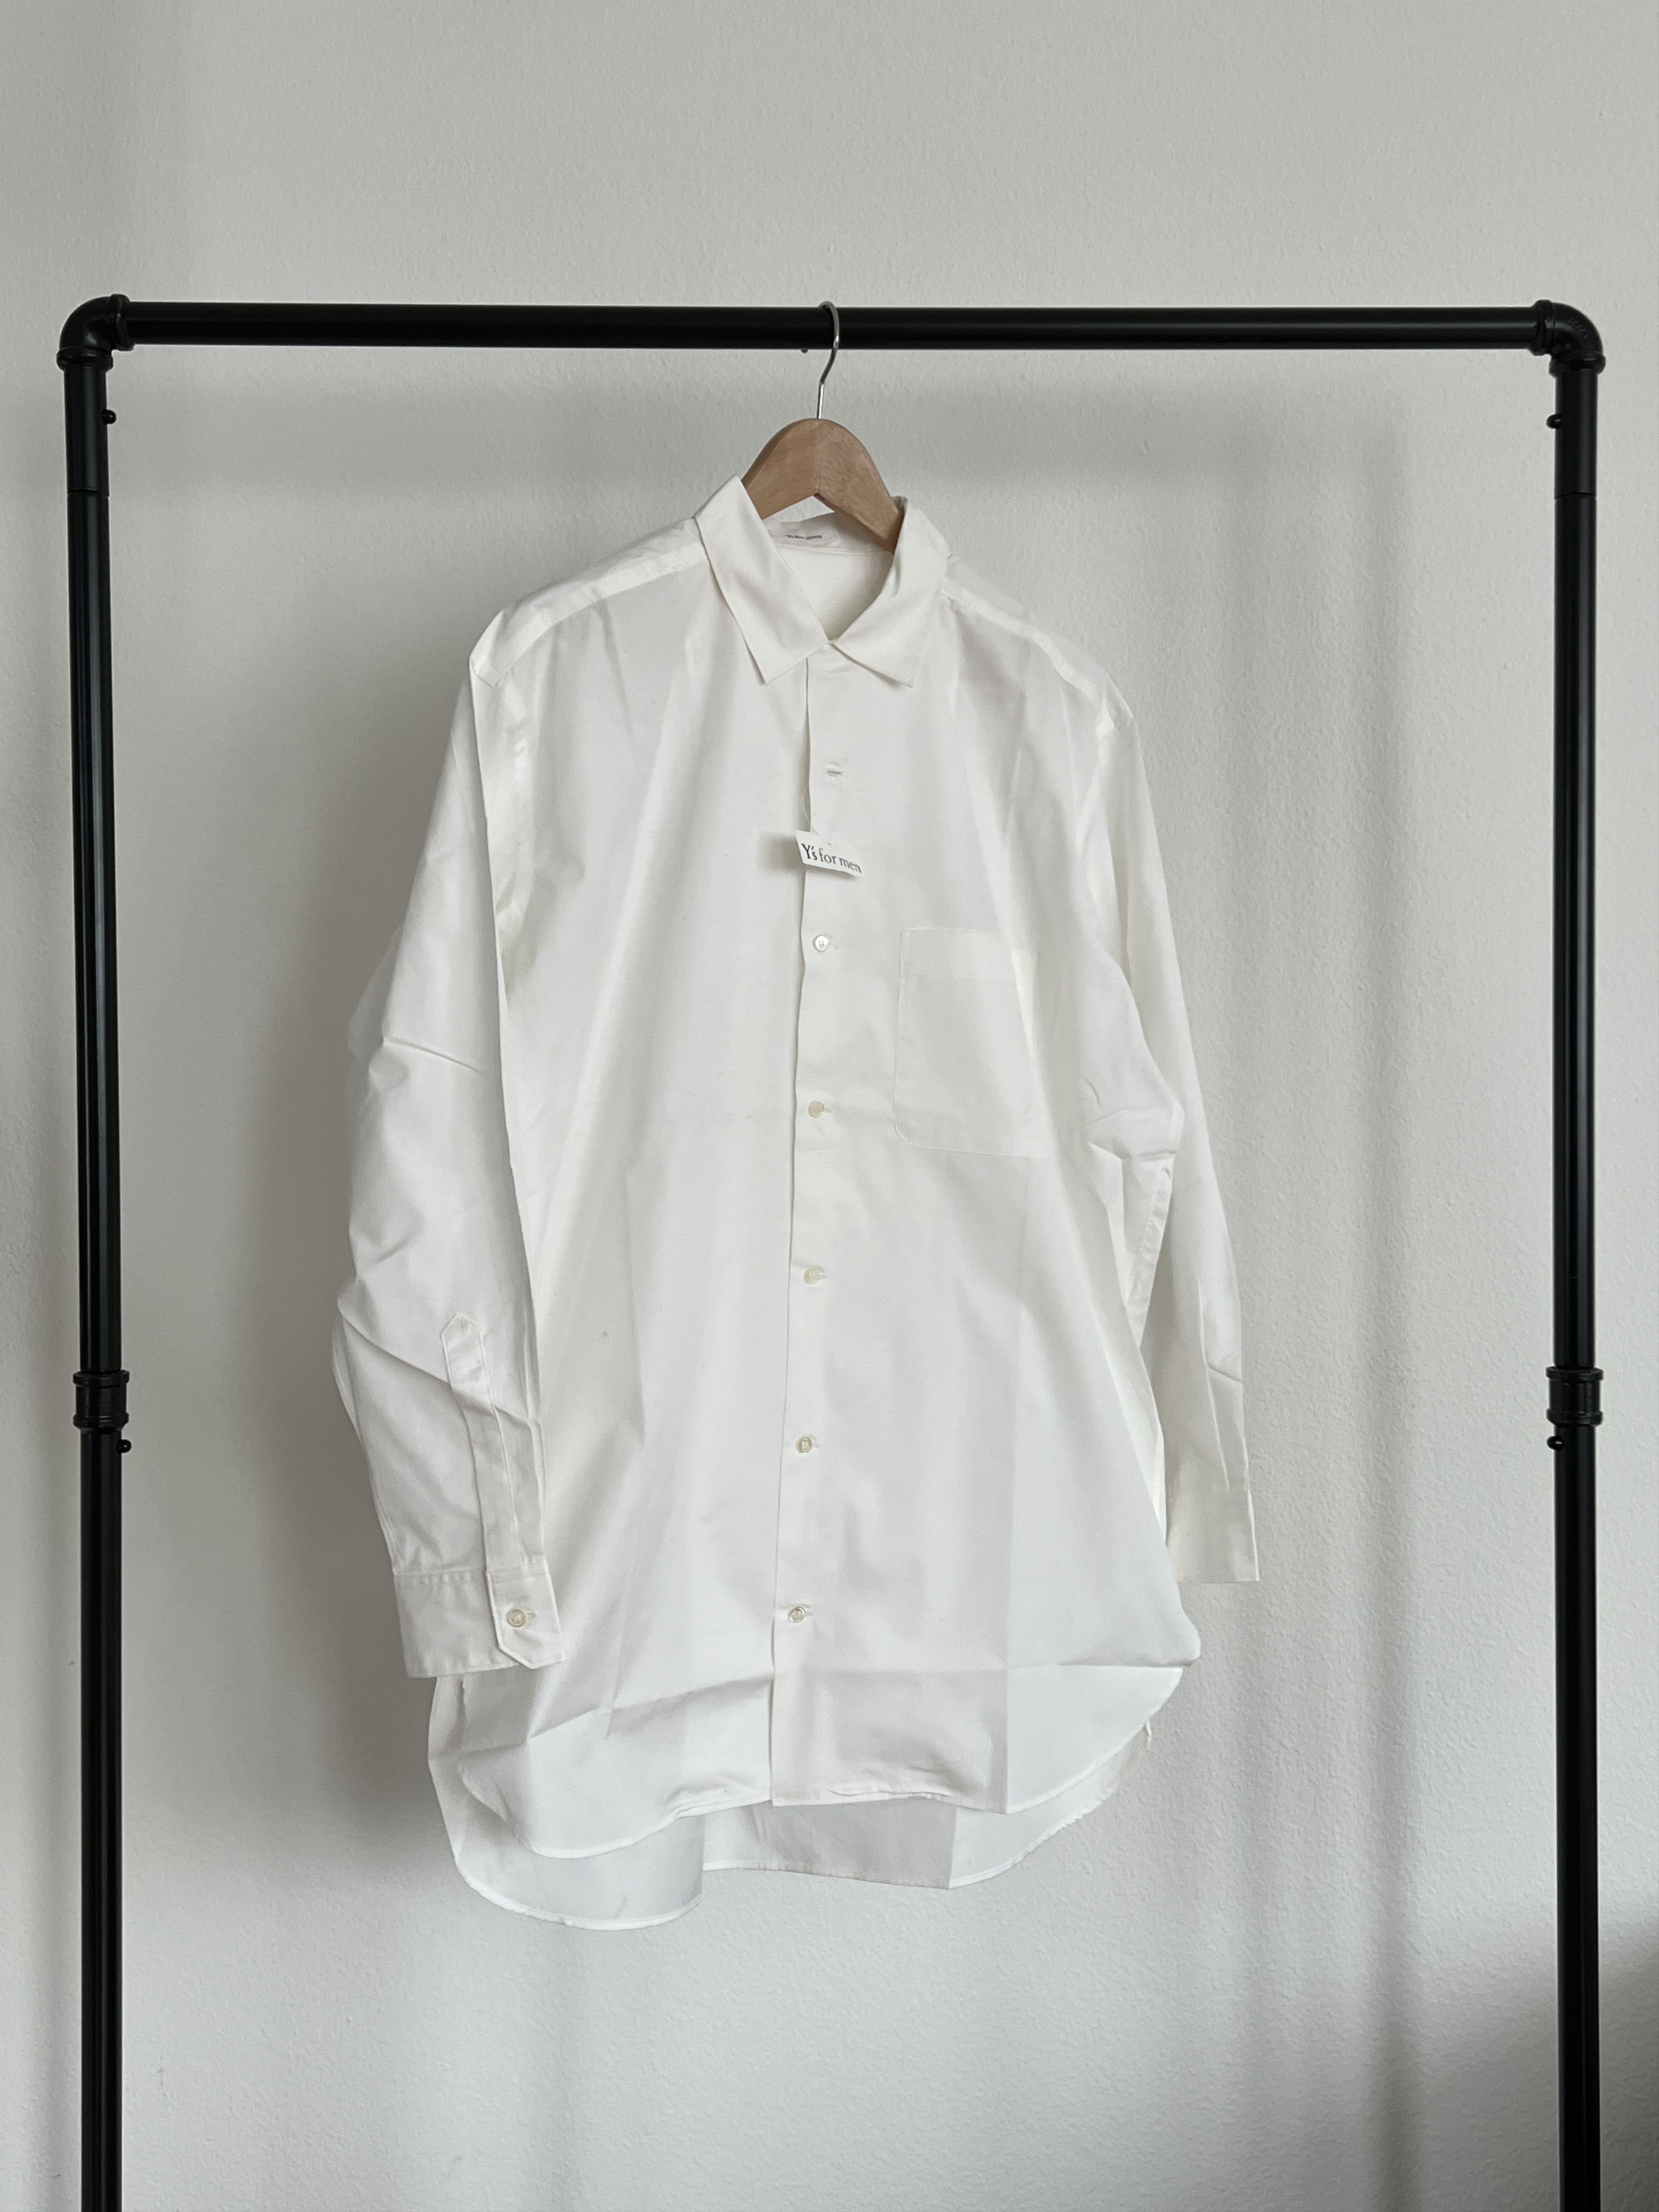 Yohji Yamamoto Y's Archive Shirt | Grailed